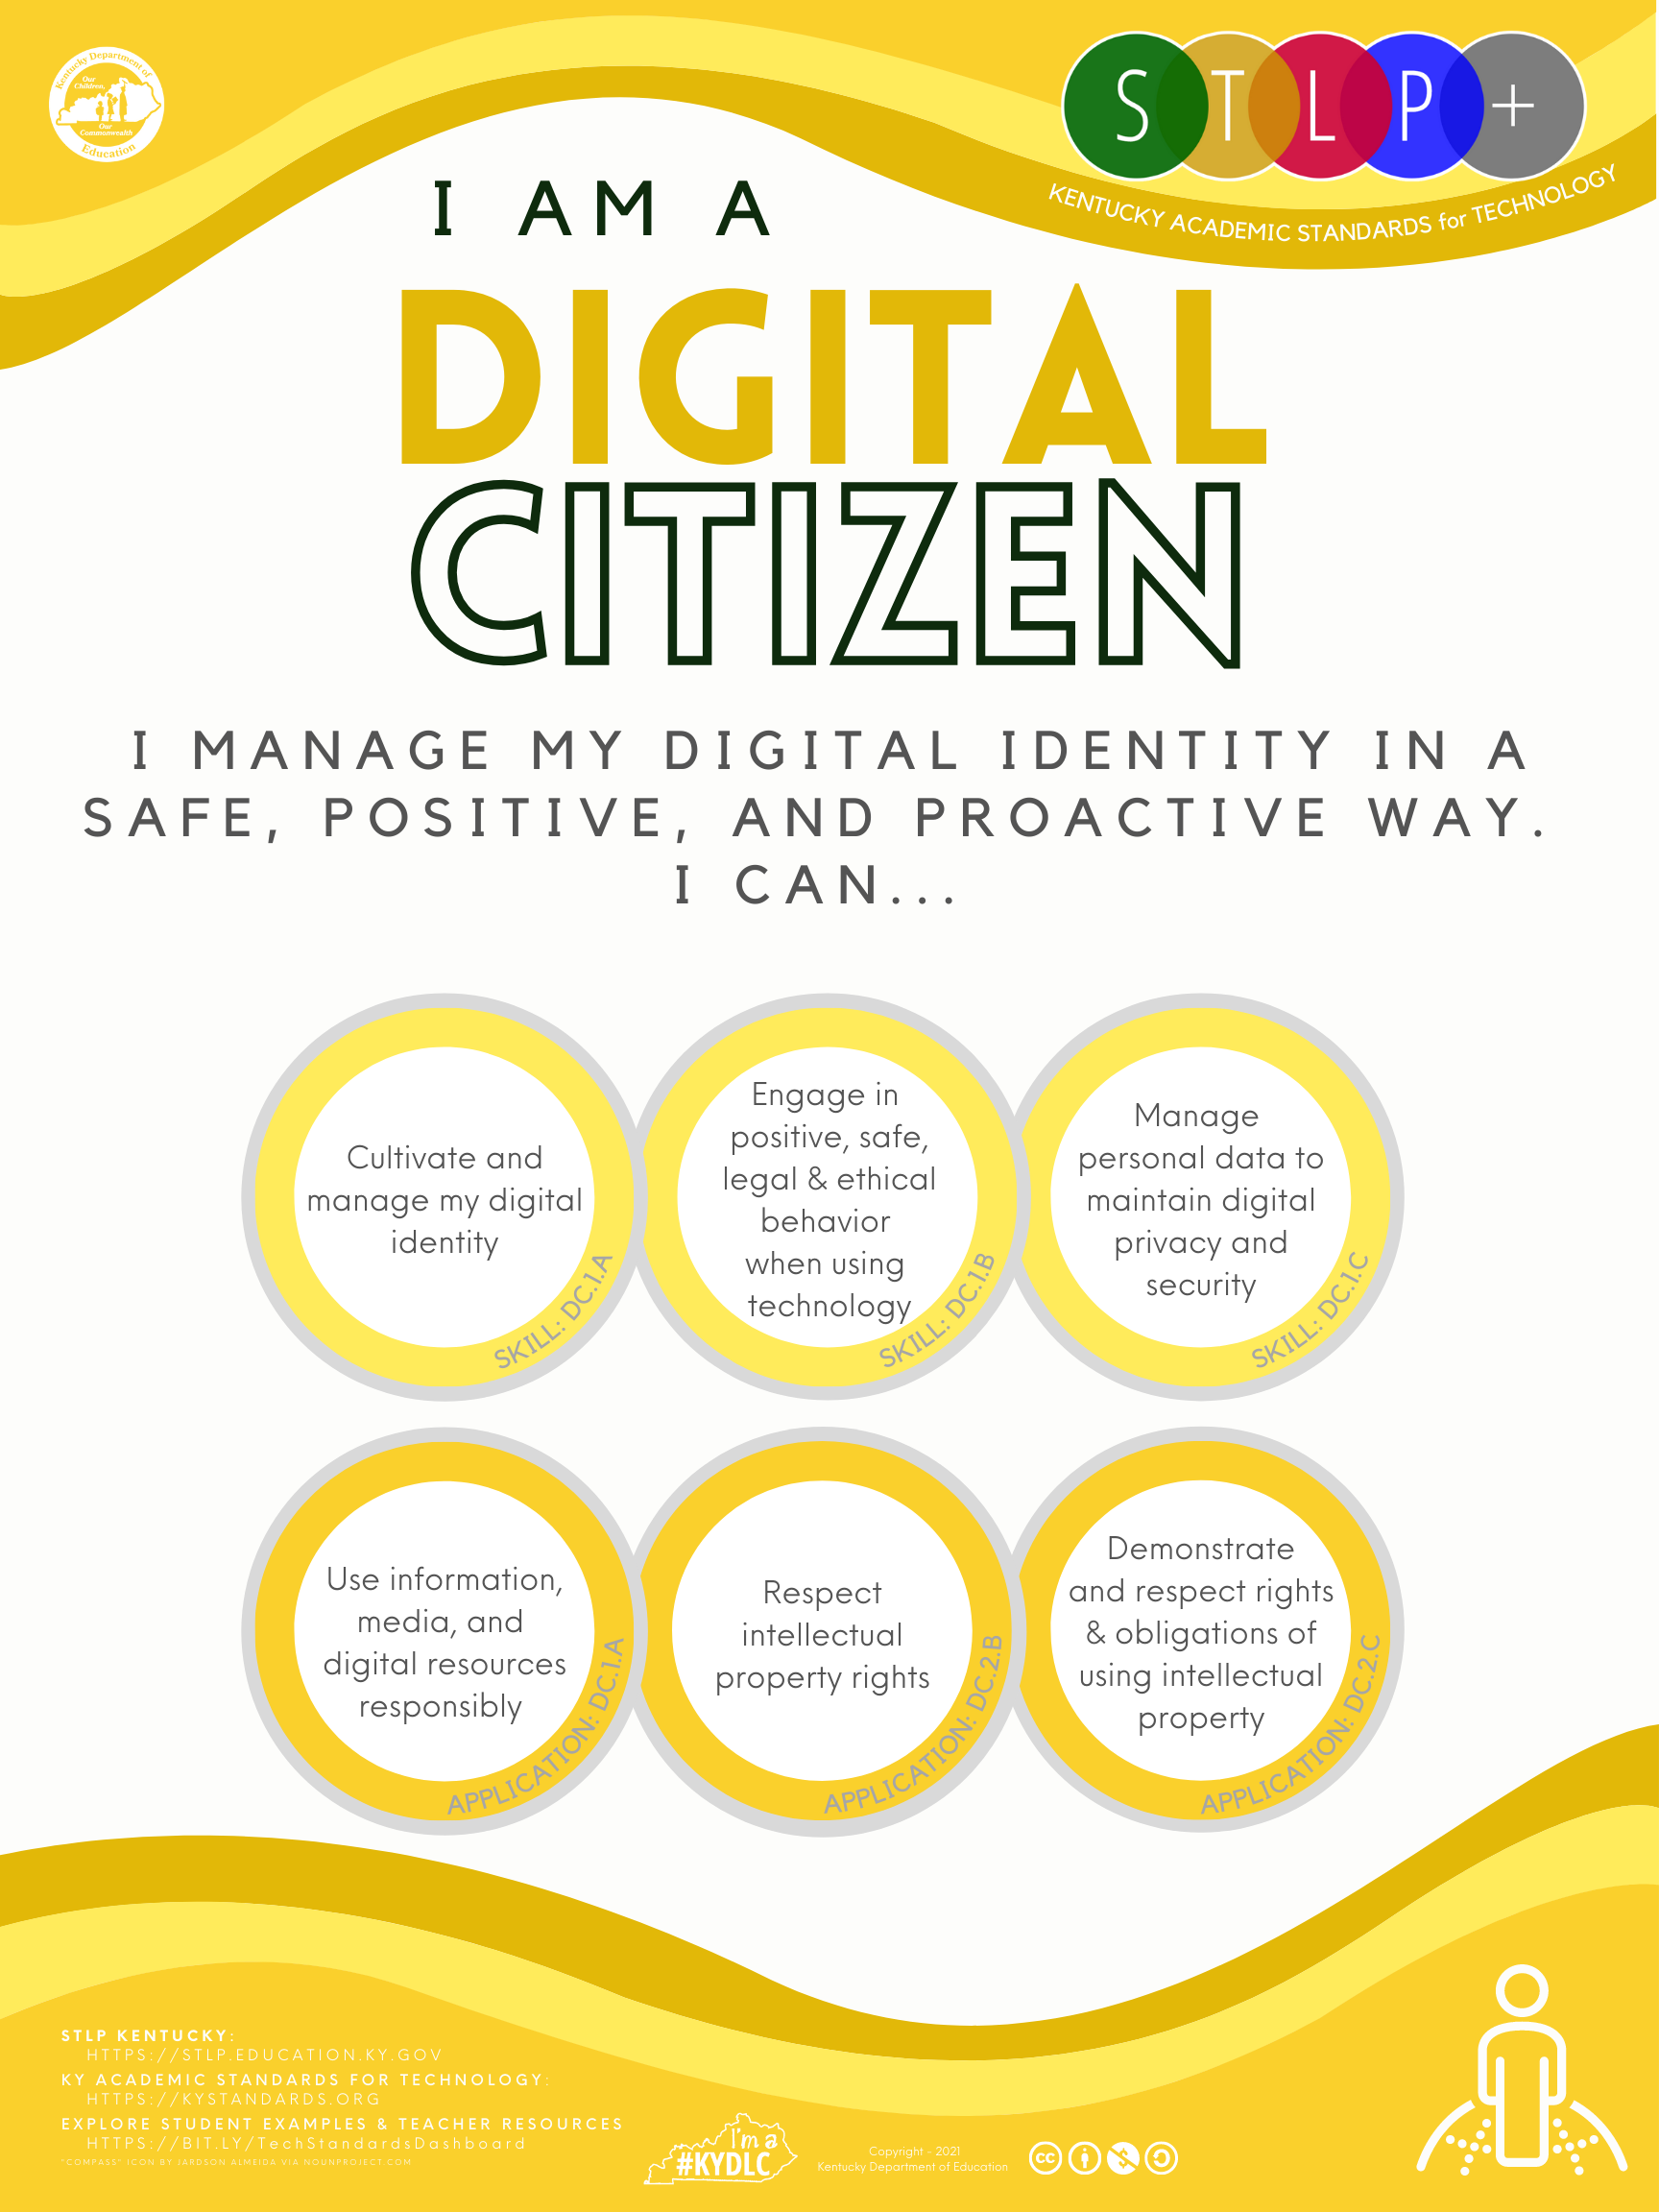 STLP ISTE Standards poster: Digital Citizen